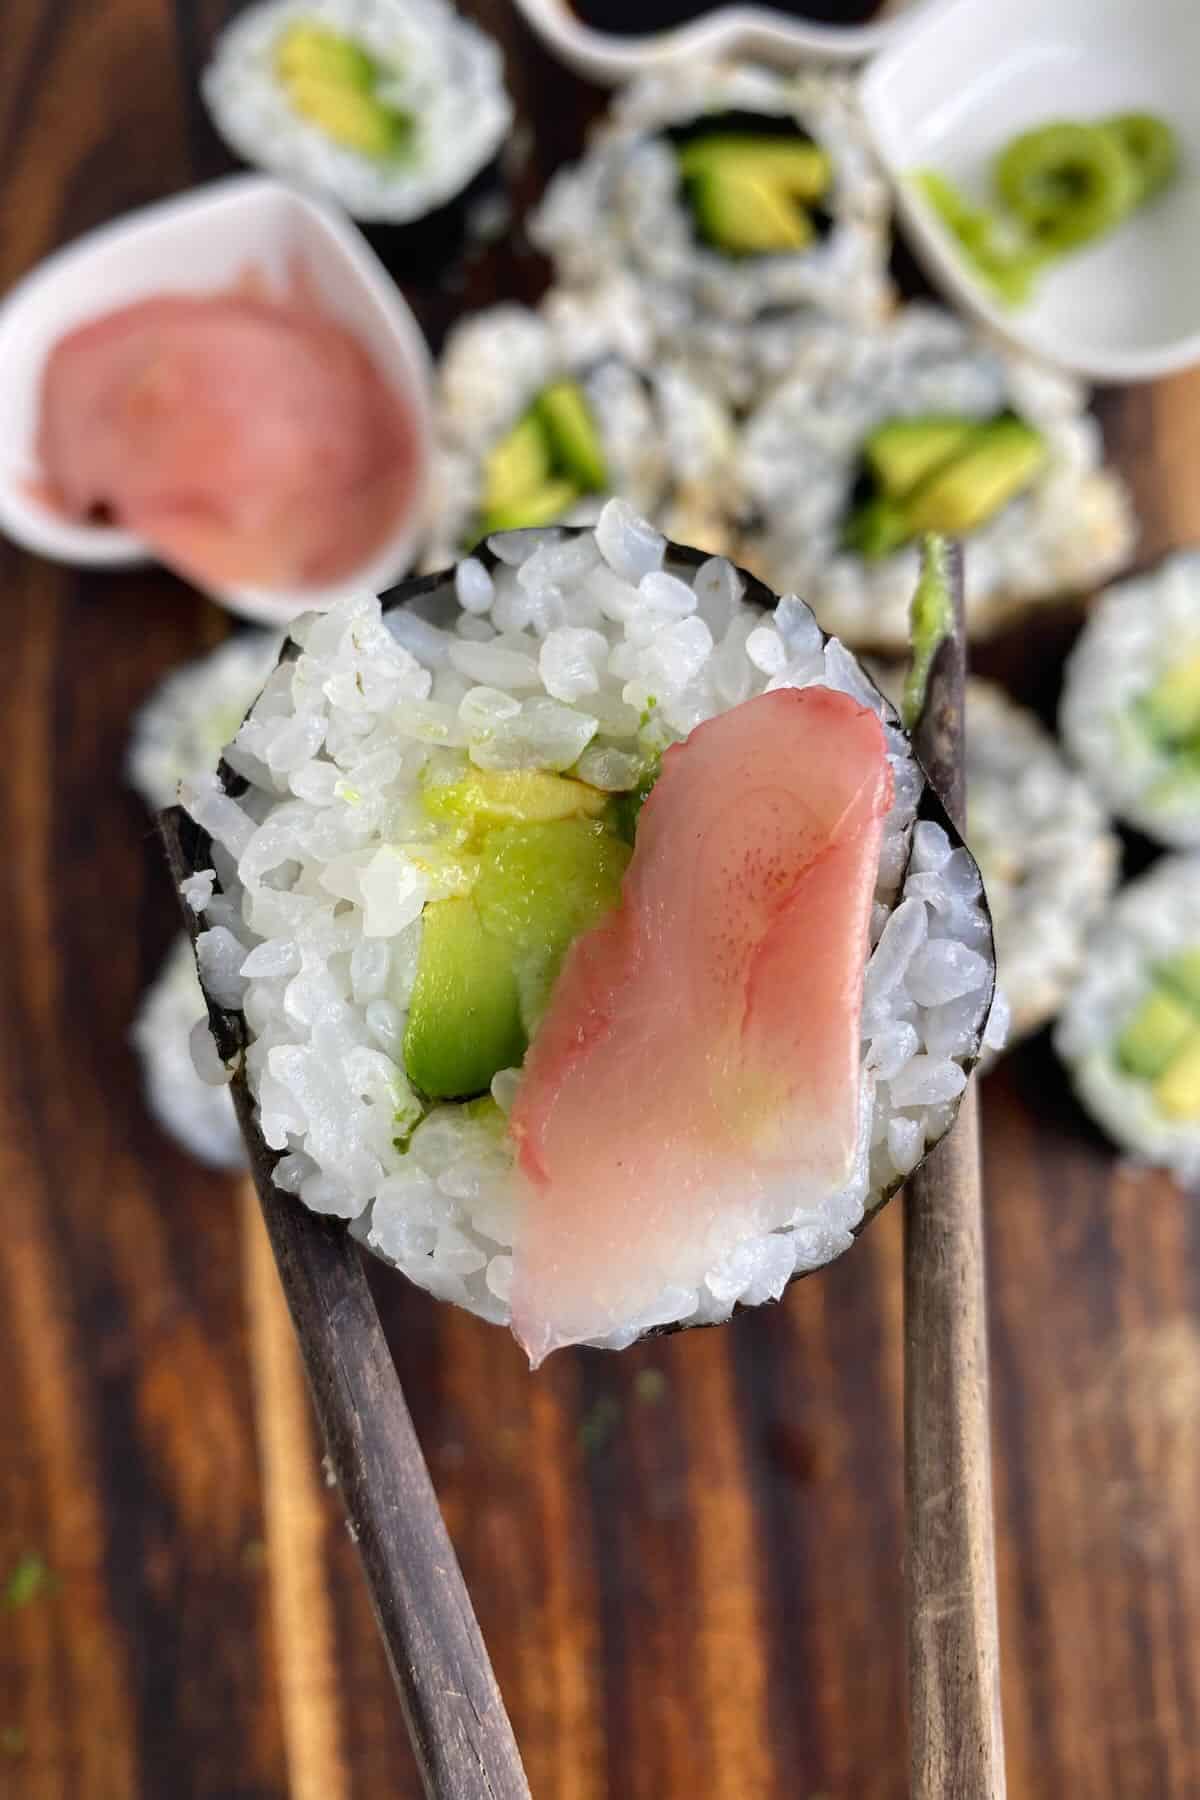 How to Make Vegan Sushi (California Rolls!) & Trying the Sushi